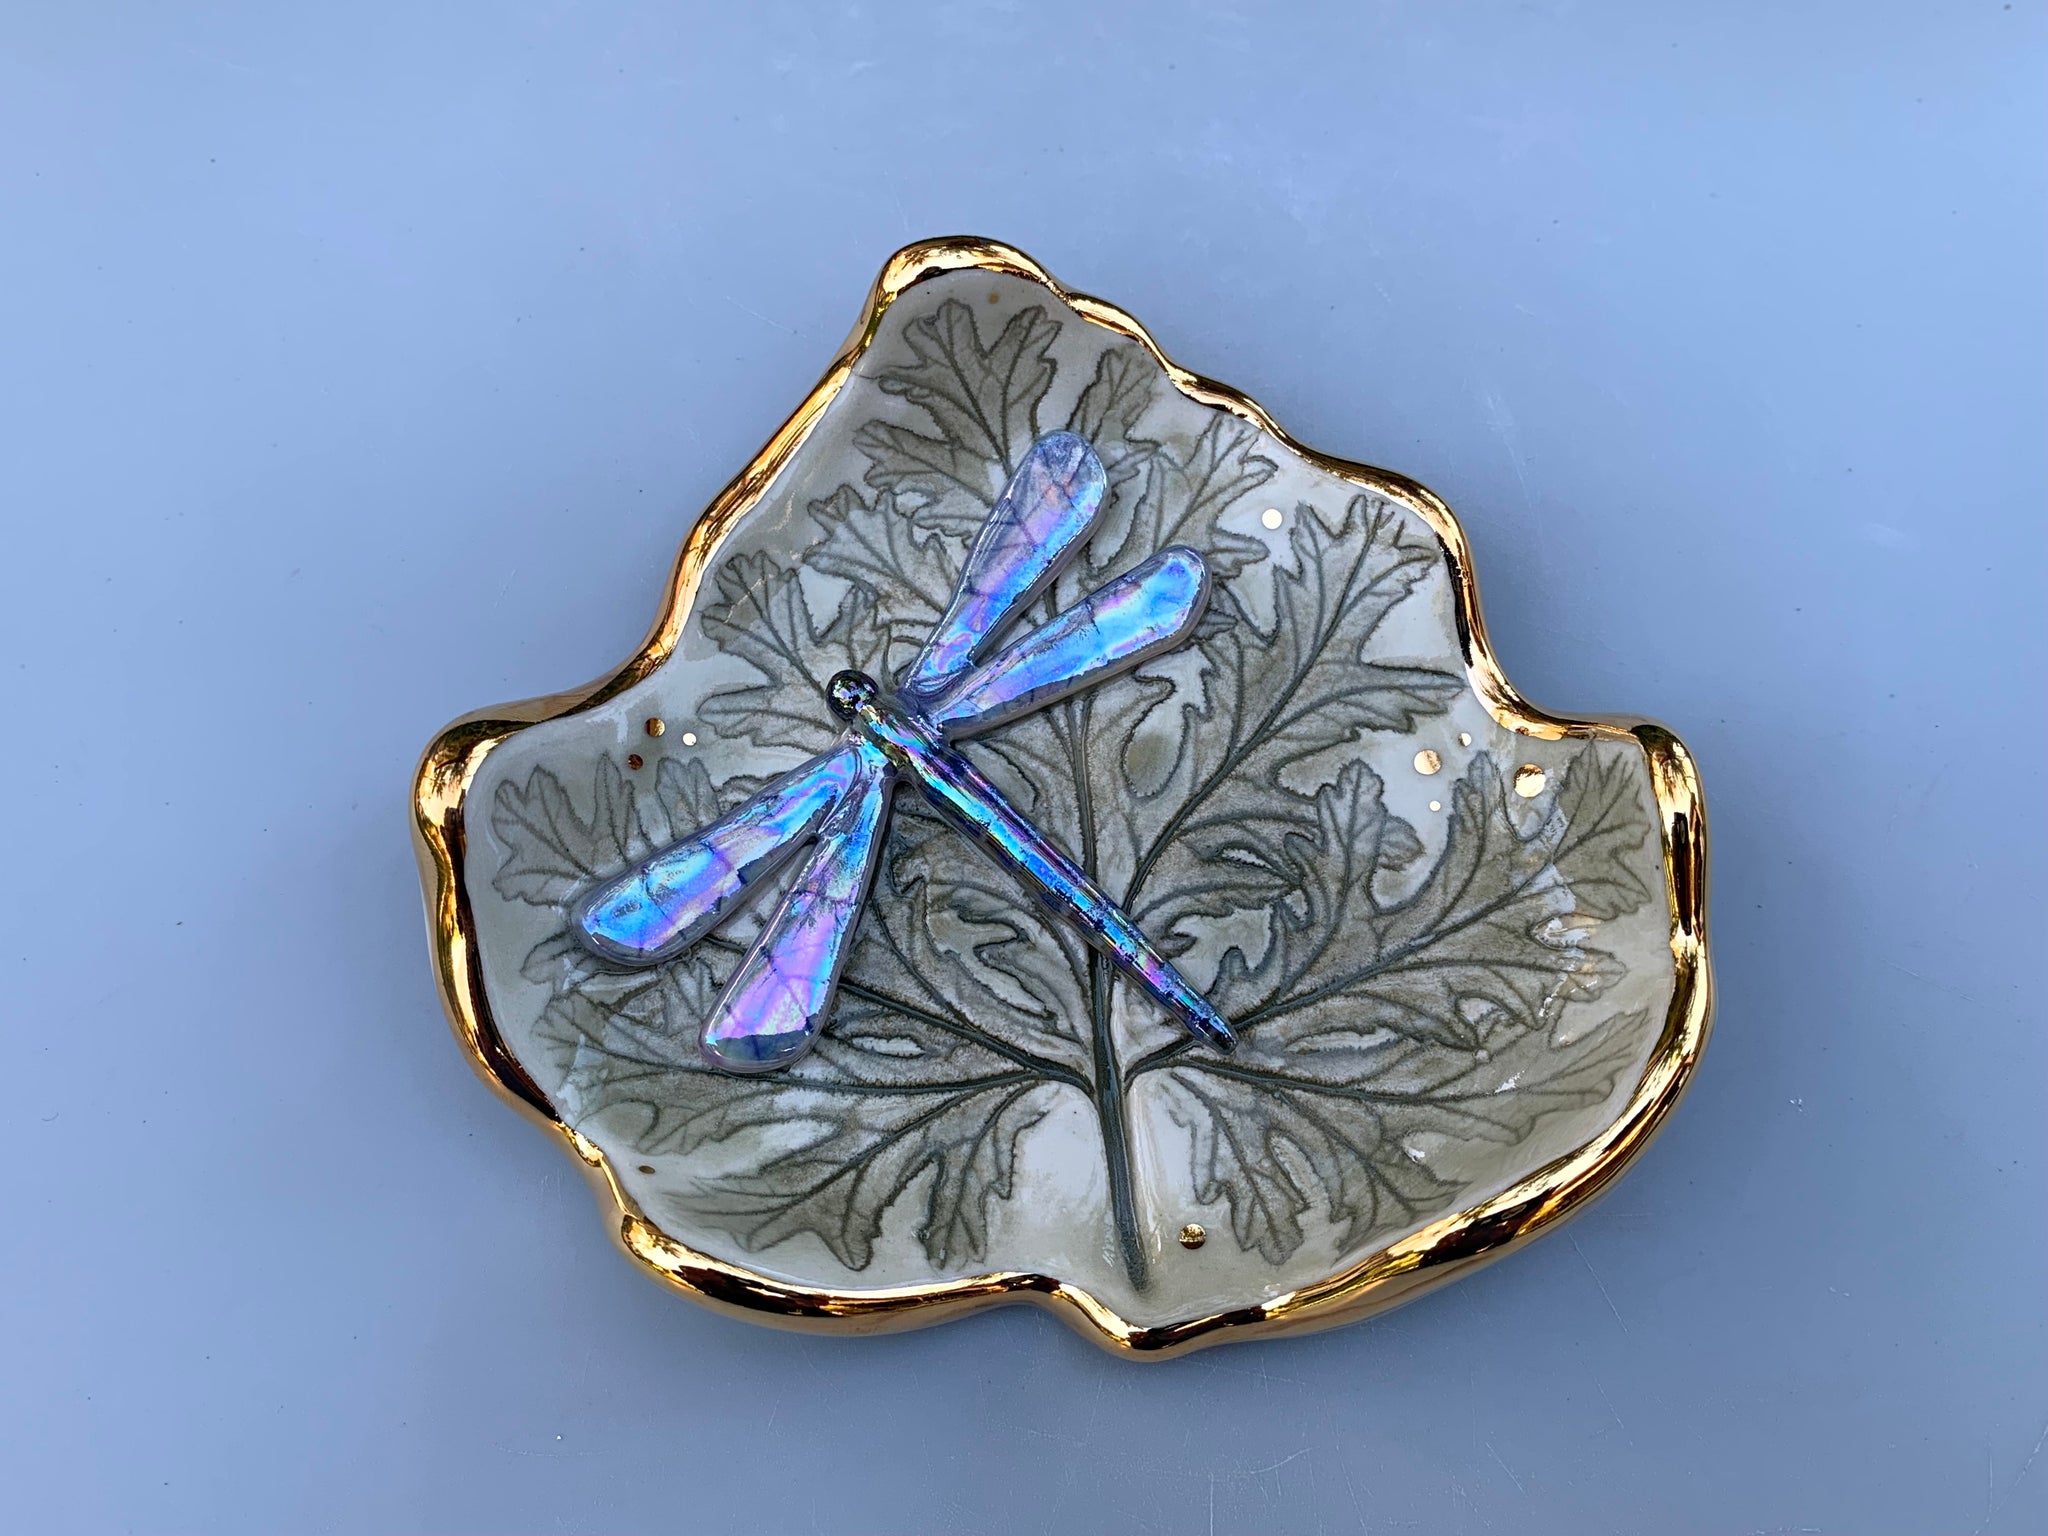 Iridescent Dragonfly Jewelry Dish with Geranium Leaf Dish